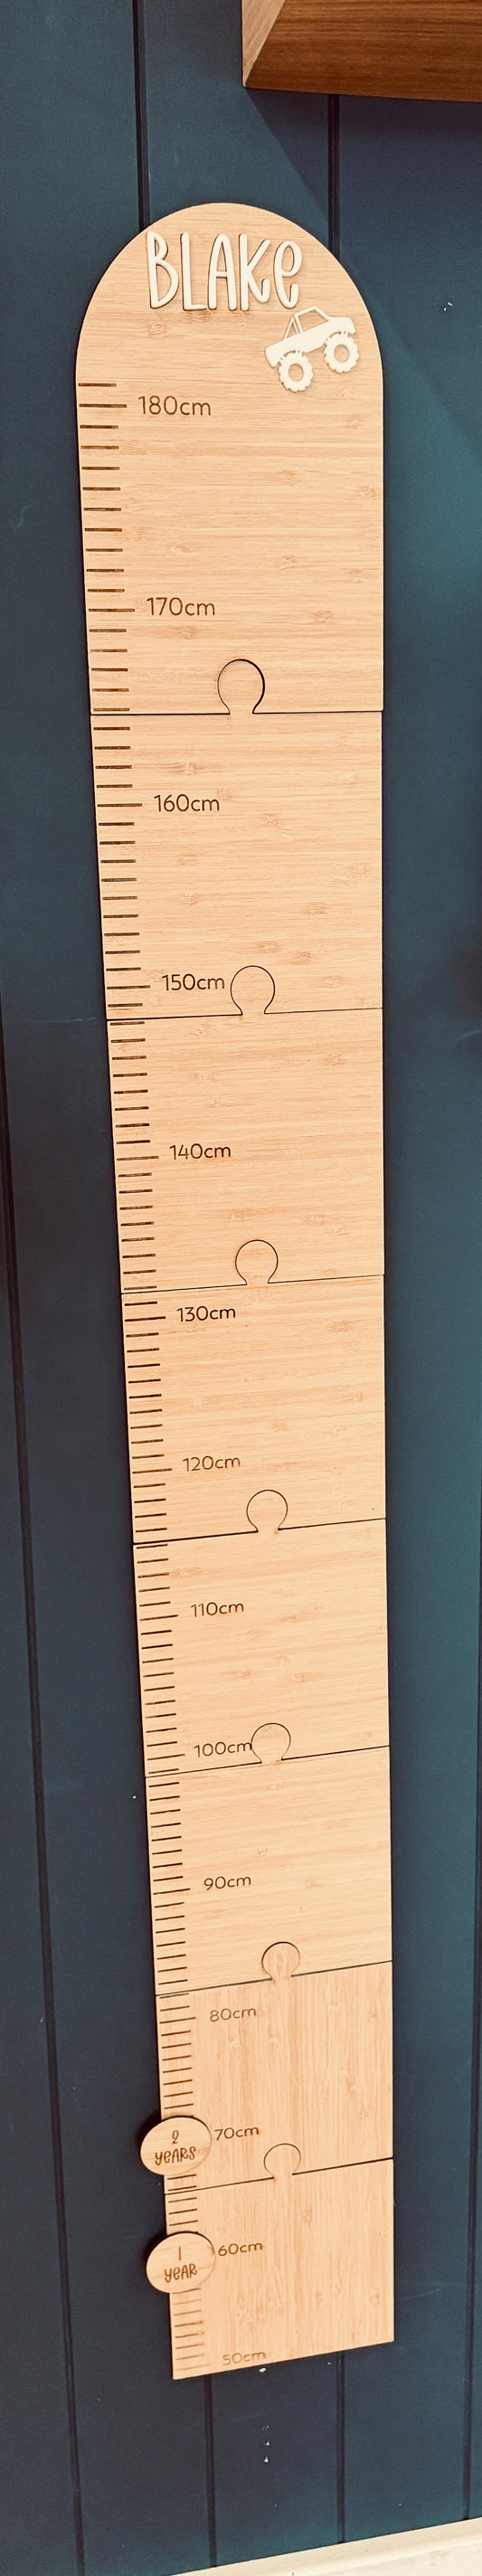 Bamboo Height Chart